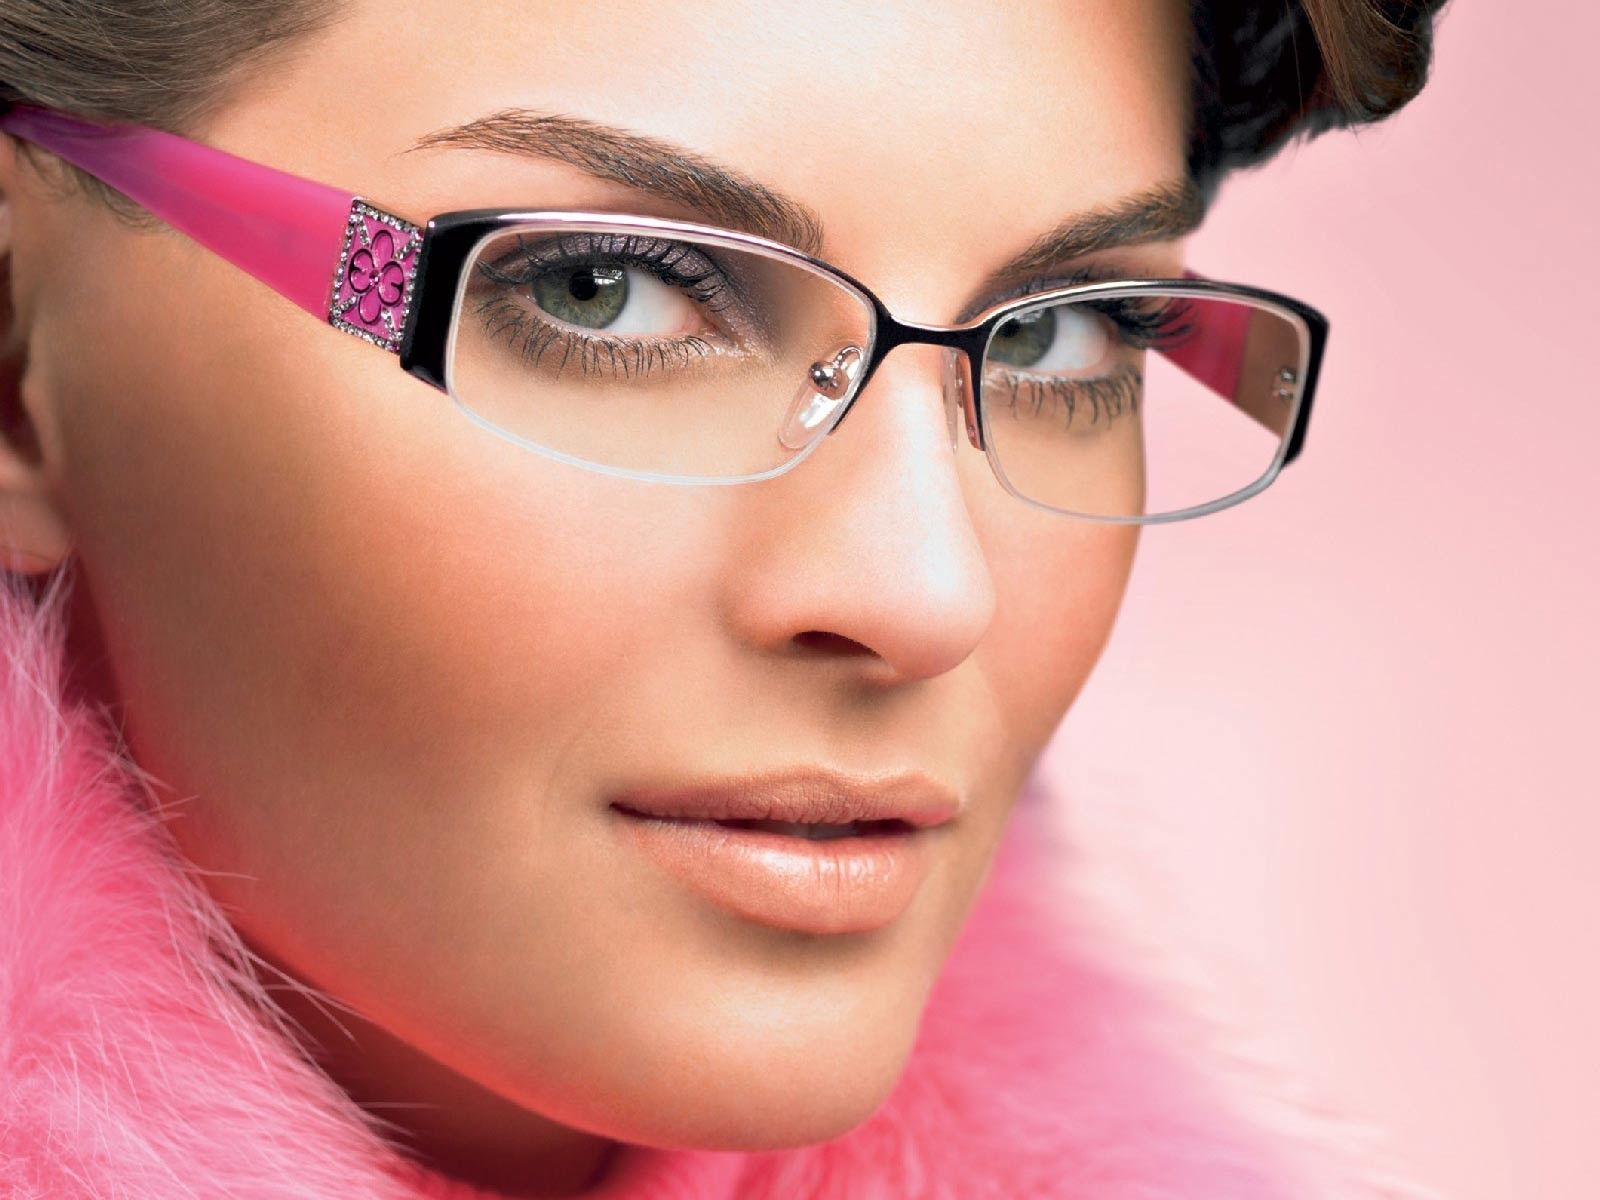 Girl in glasses desktop wallpaper free download, background